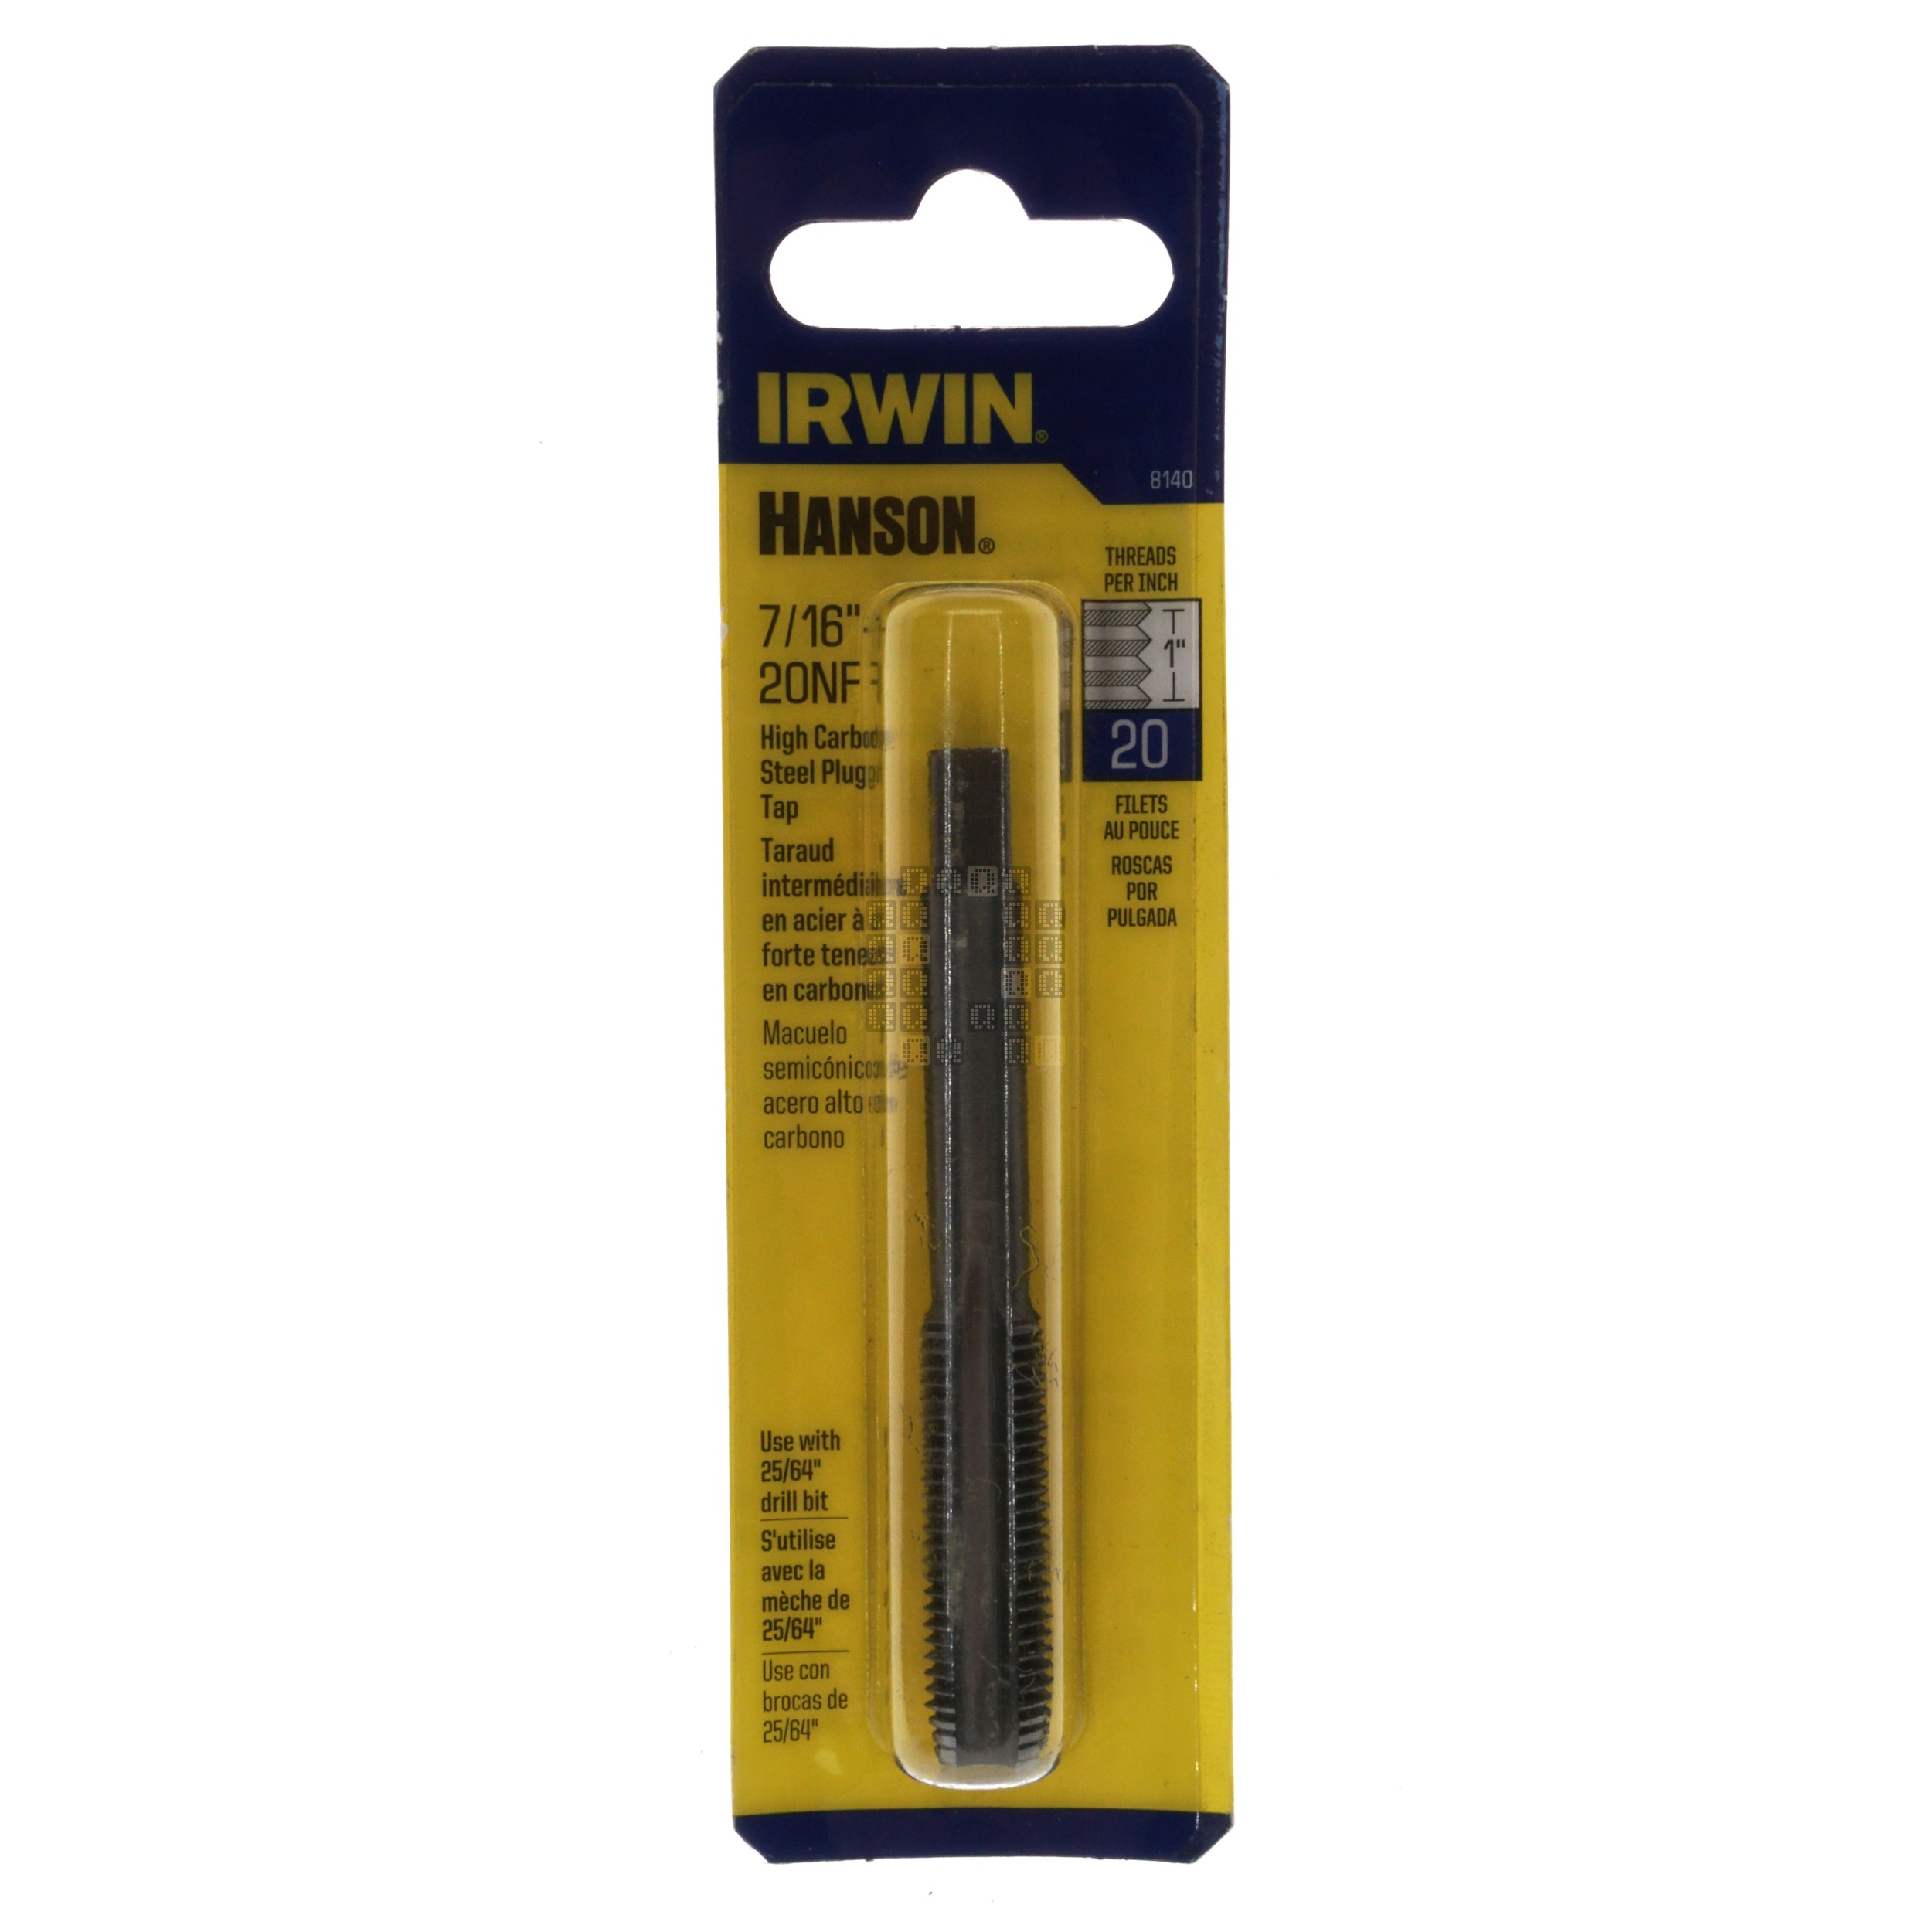 Irwin Hanson 8139 7/16" - 14NC High Carbon Steel Plug Tap